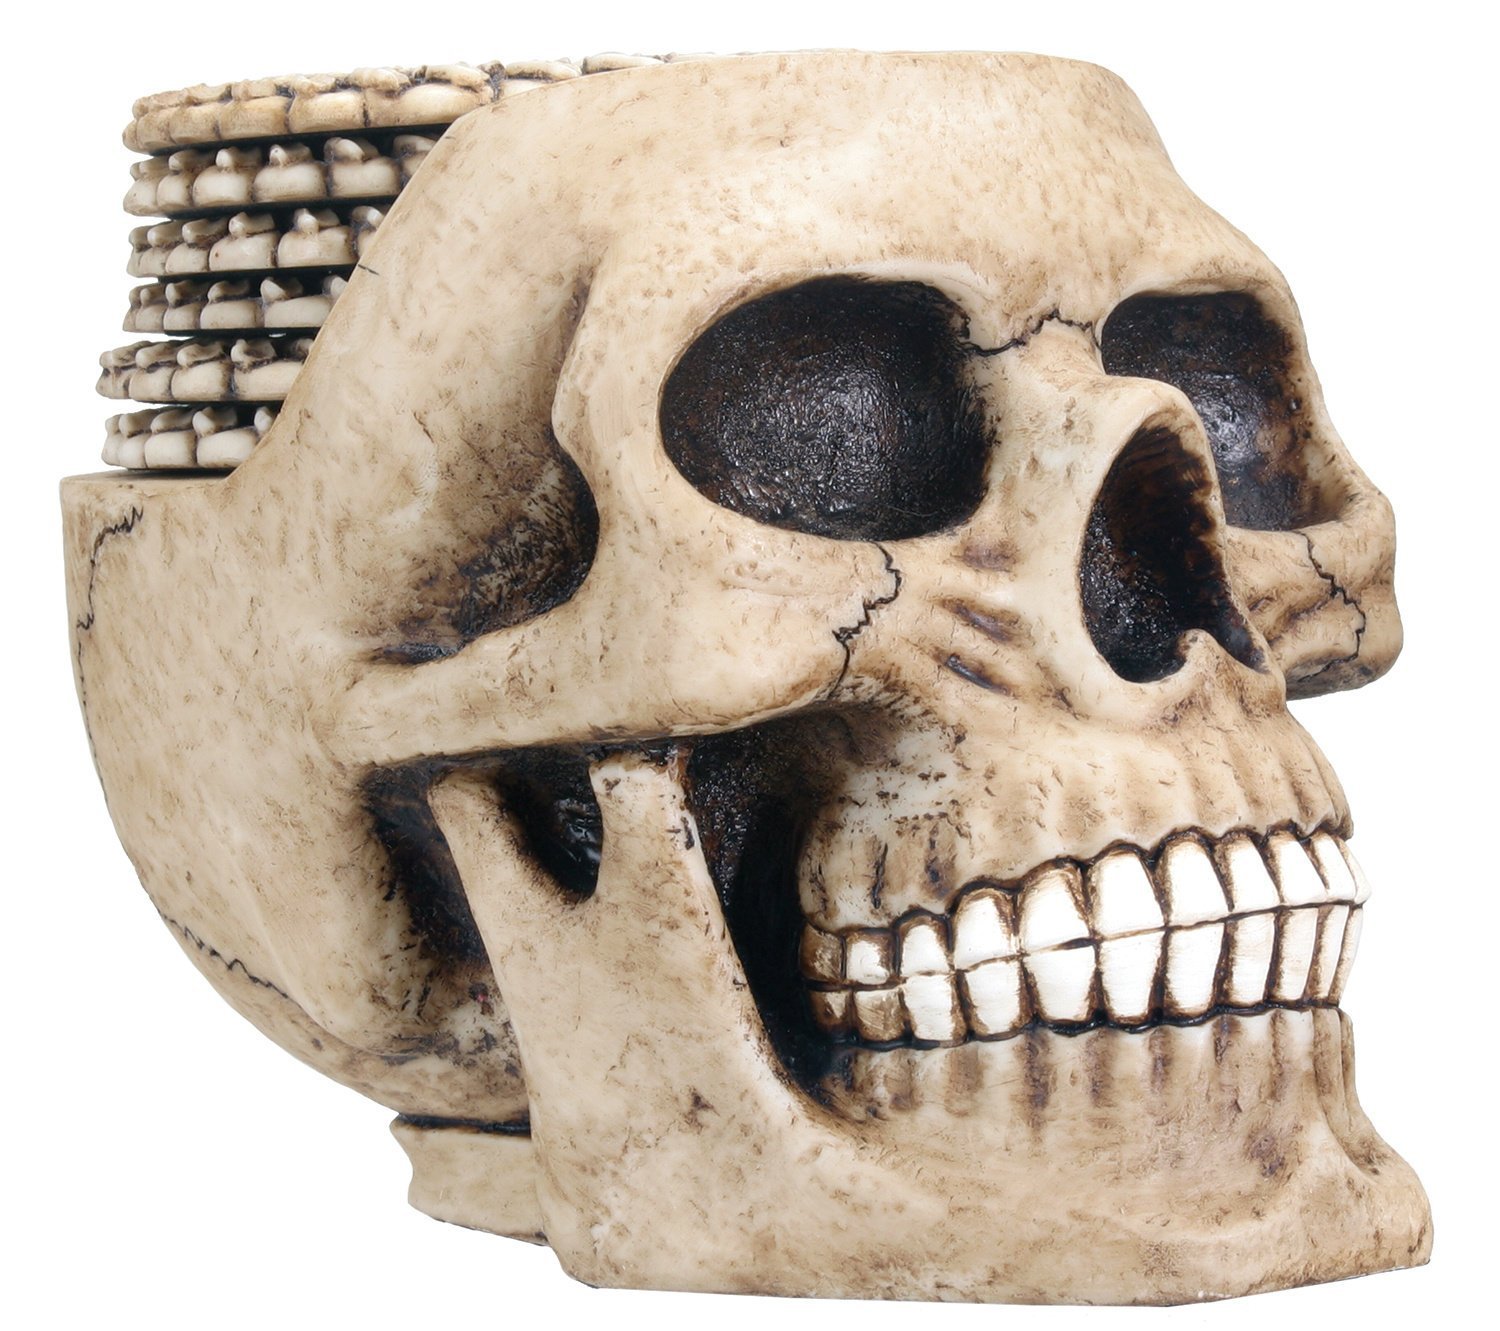 Amazon.com: Skull Coaster Set (6 Coasters) Collectible Skeleton ...